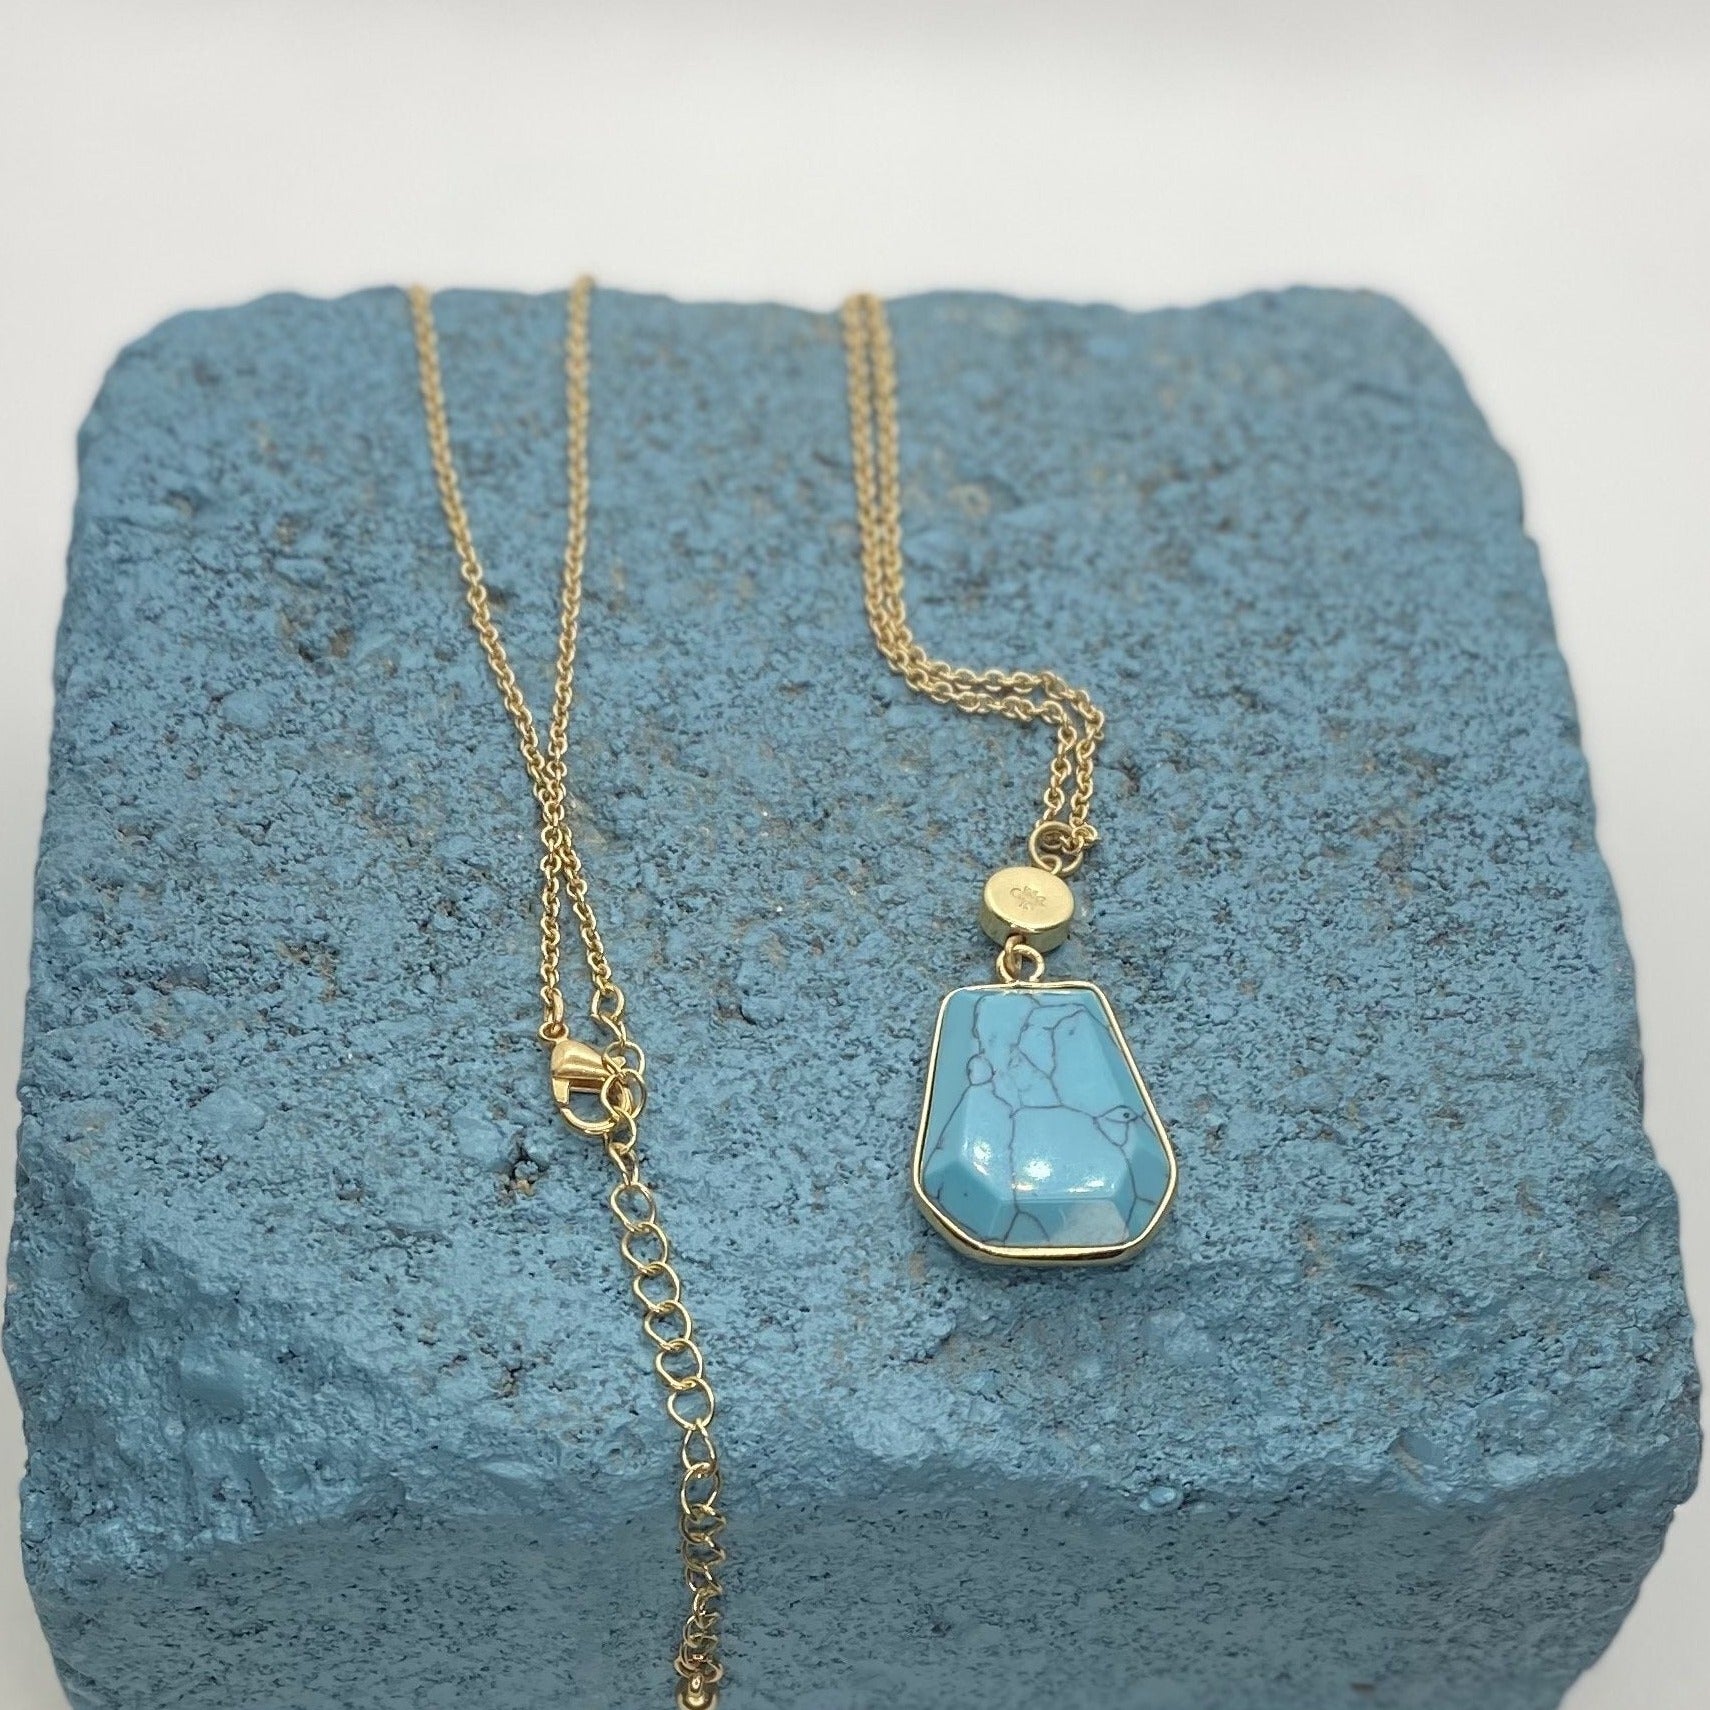 GKR “Signature” Semi Precious Stone Pendant Necklace - GIFTKEYSROCK 